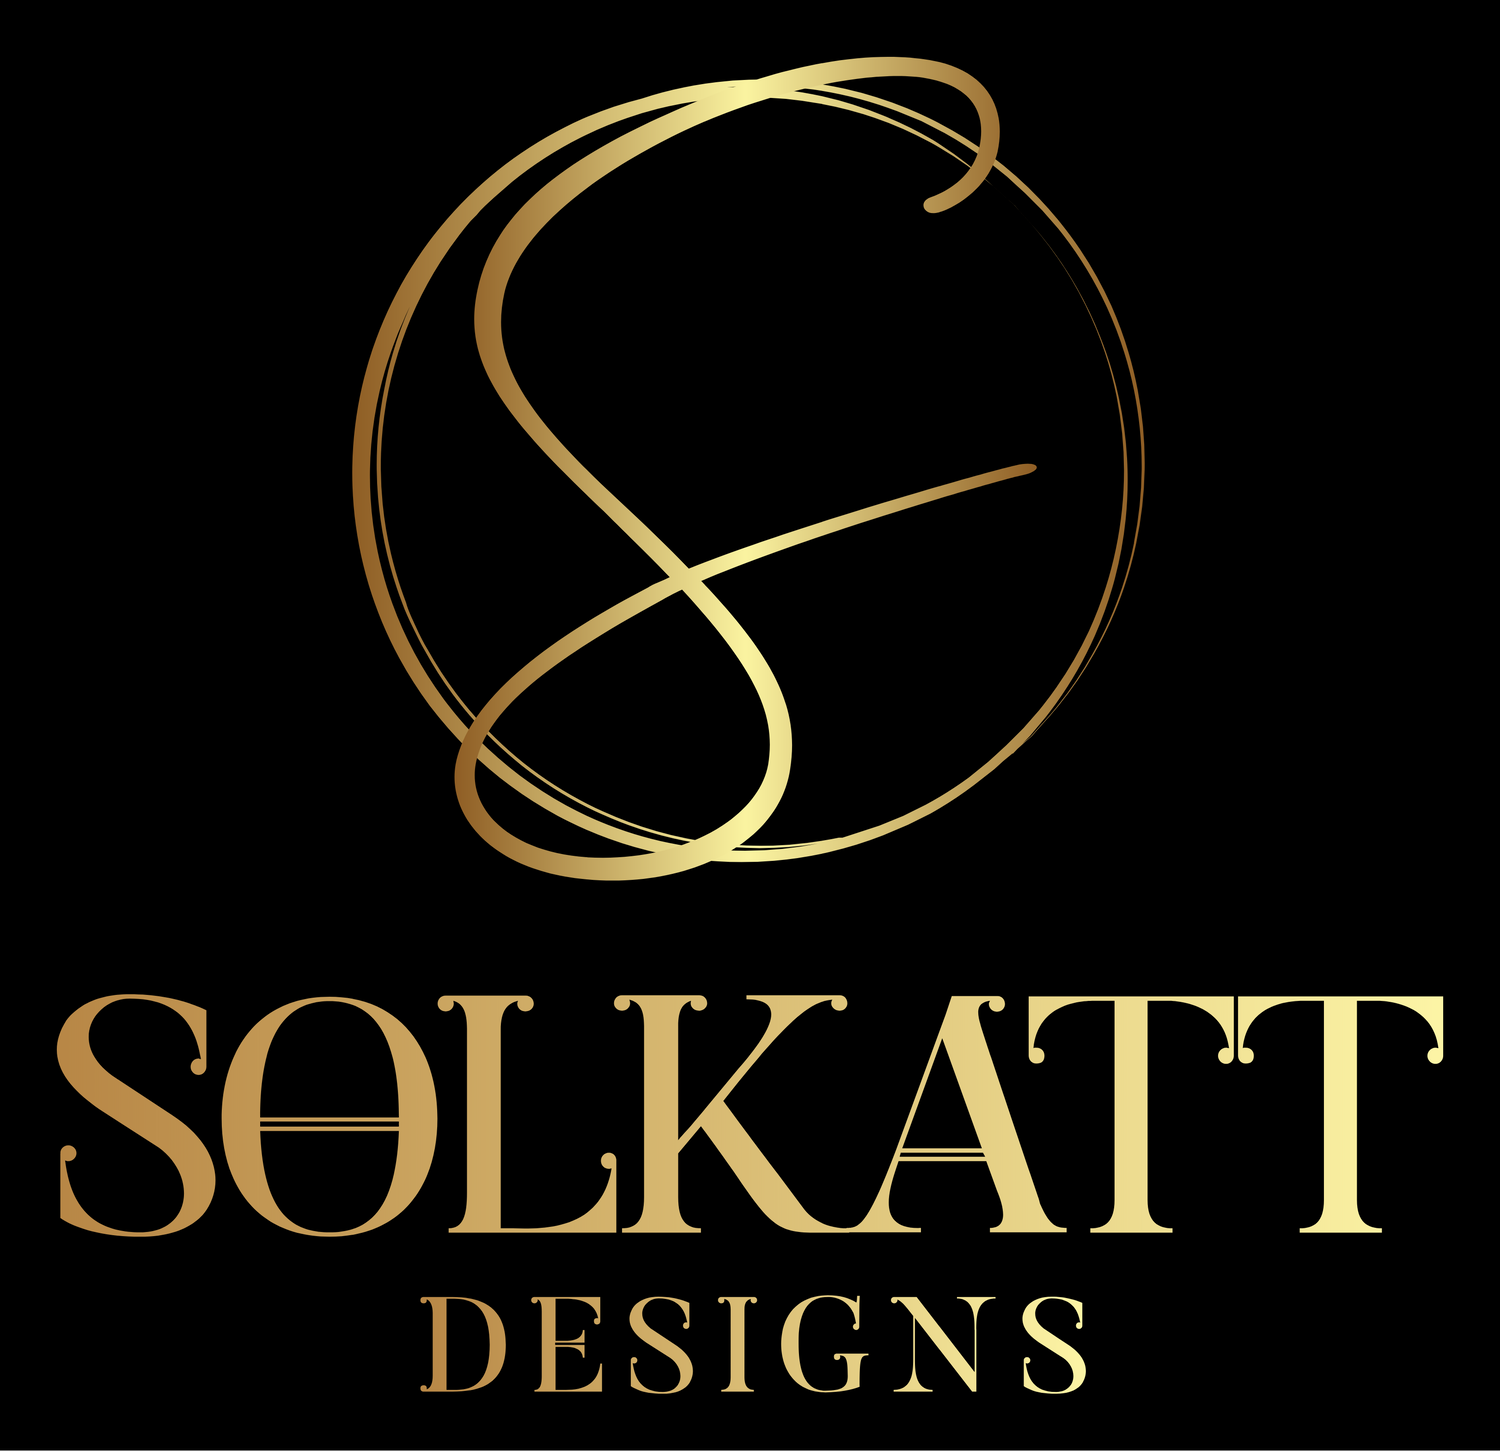 Solkatt Designs Colour logo with background